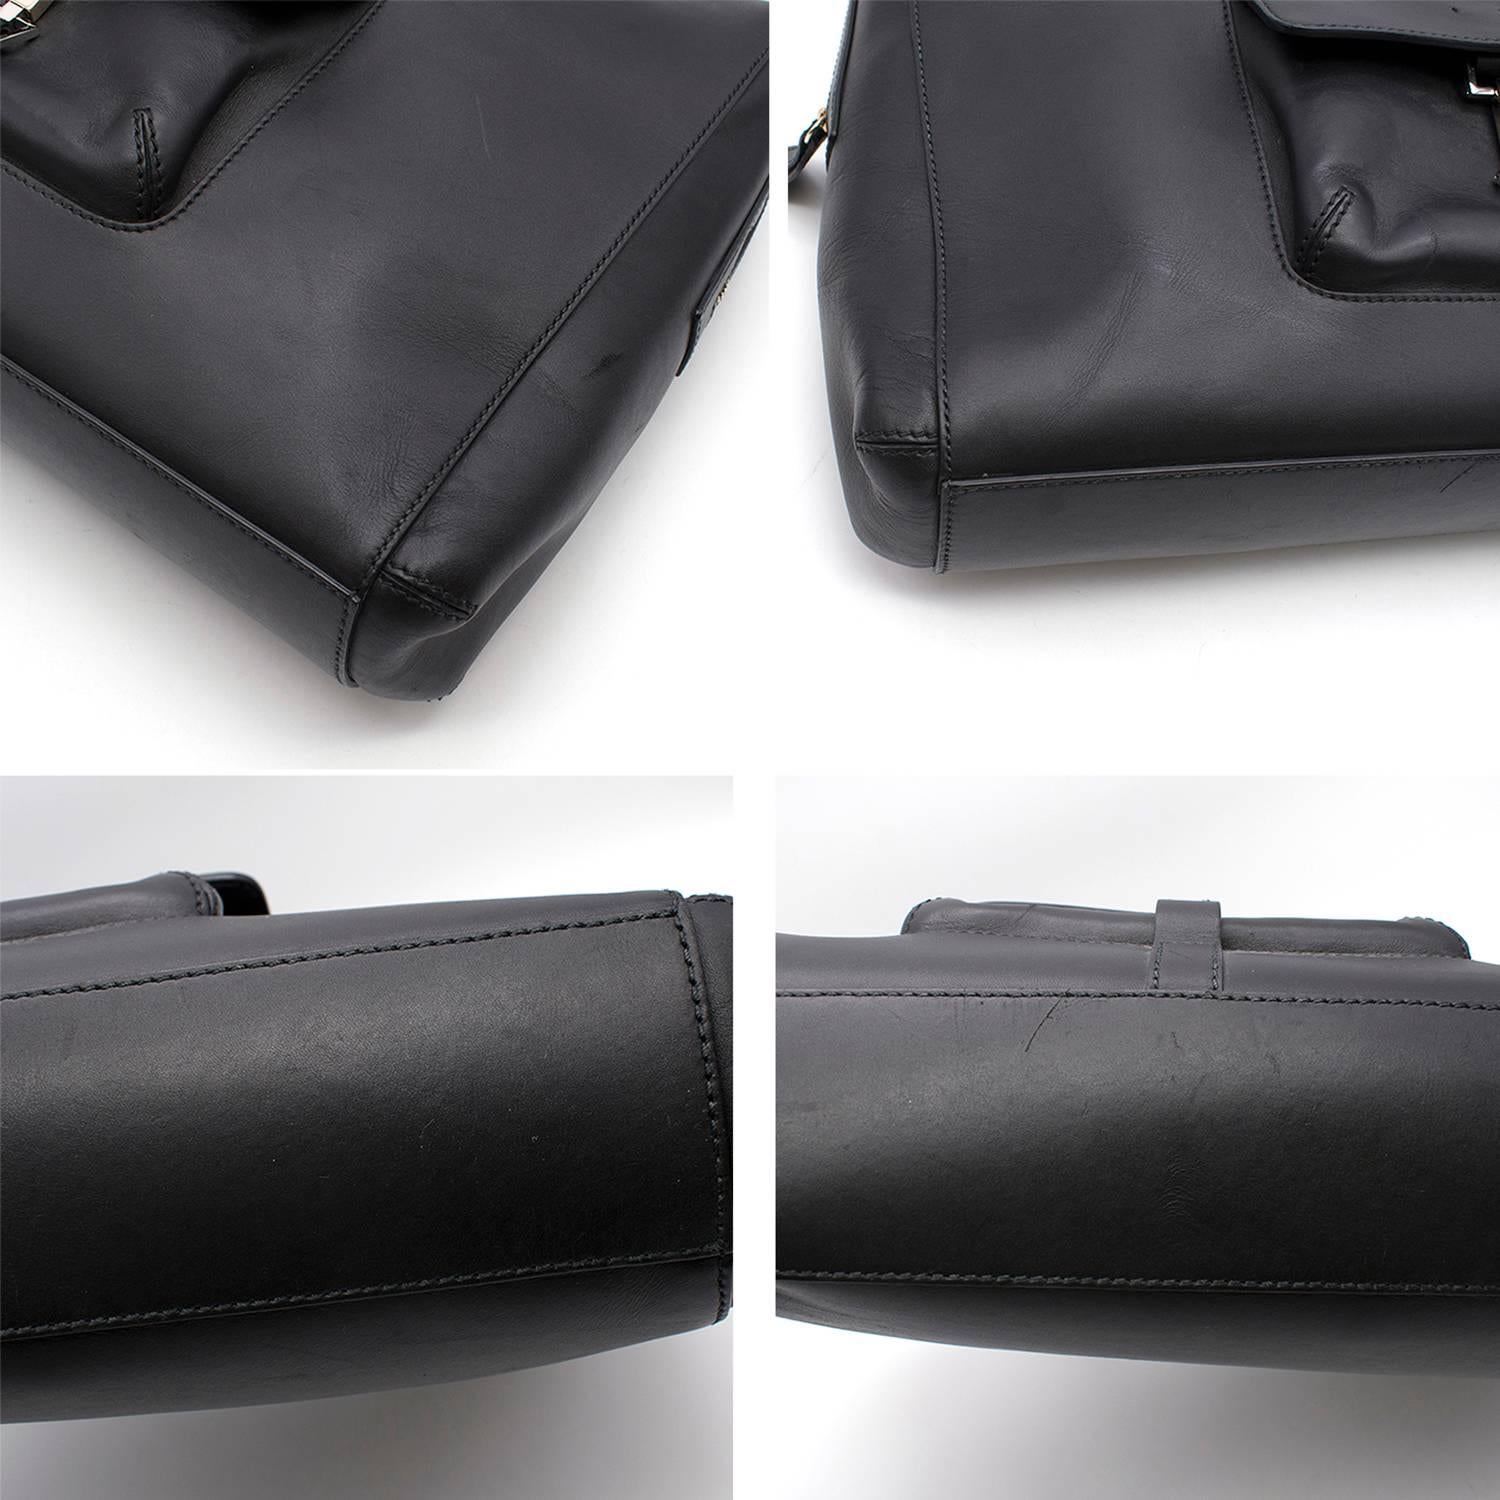 zegna leather bag